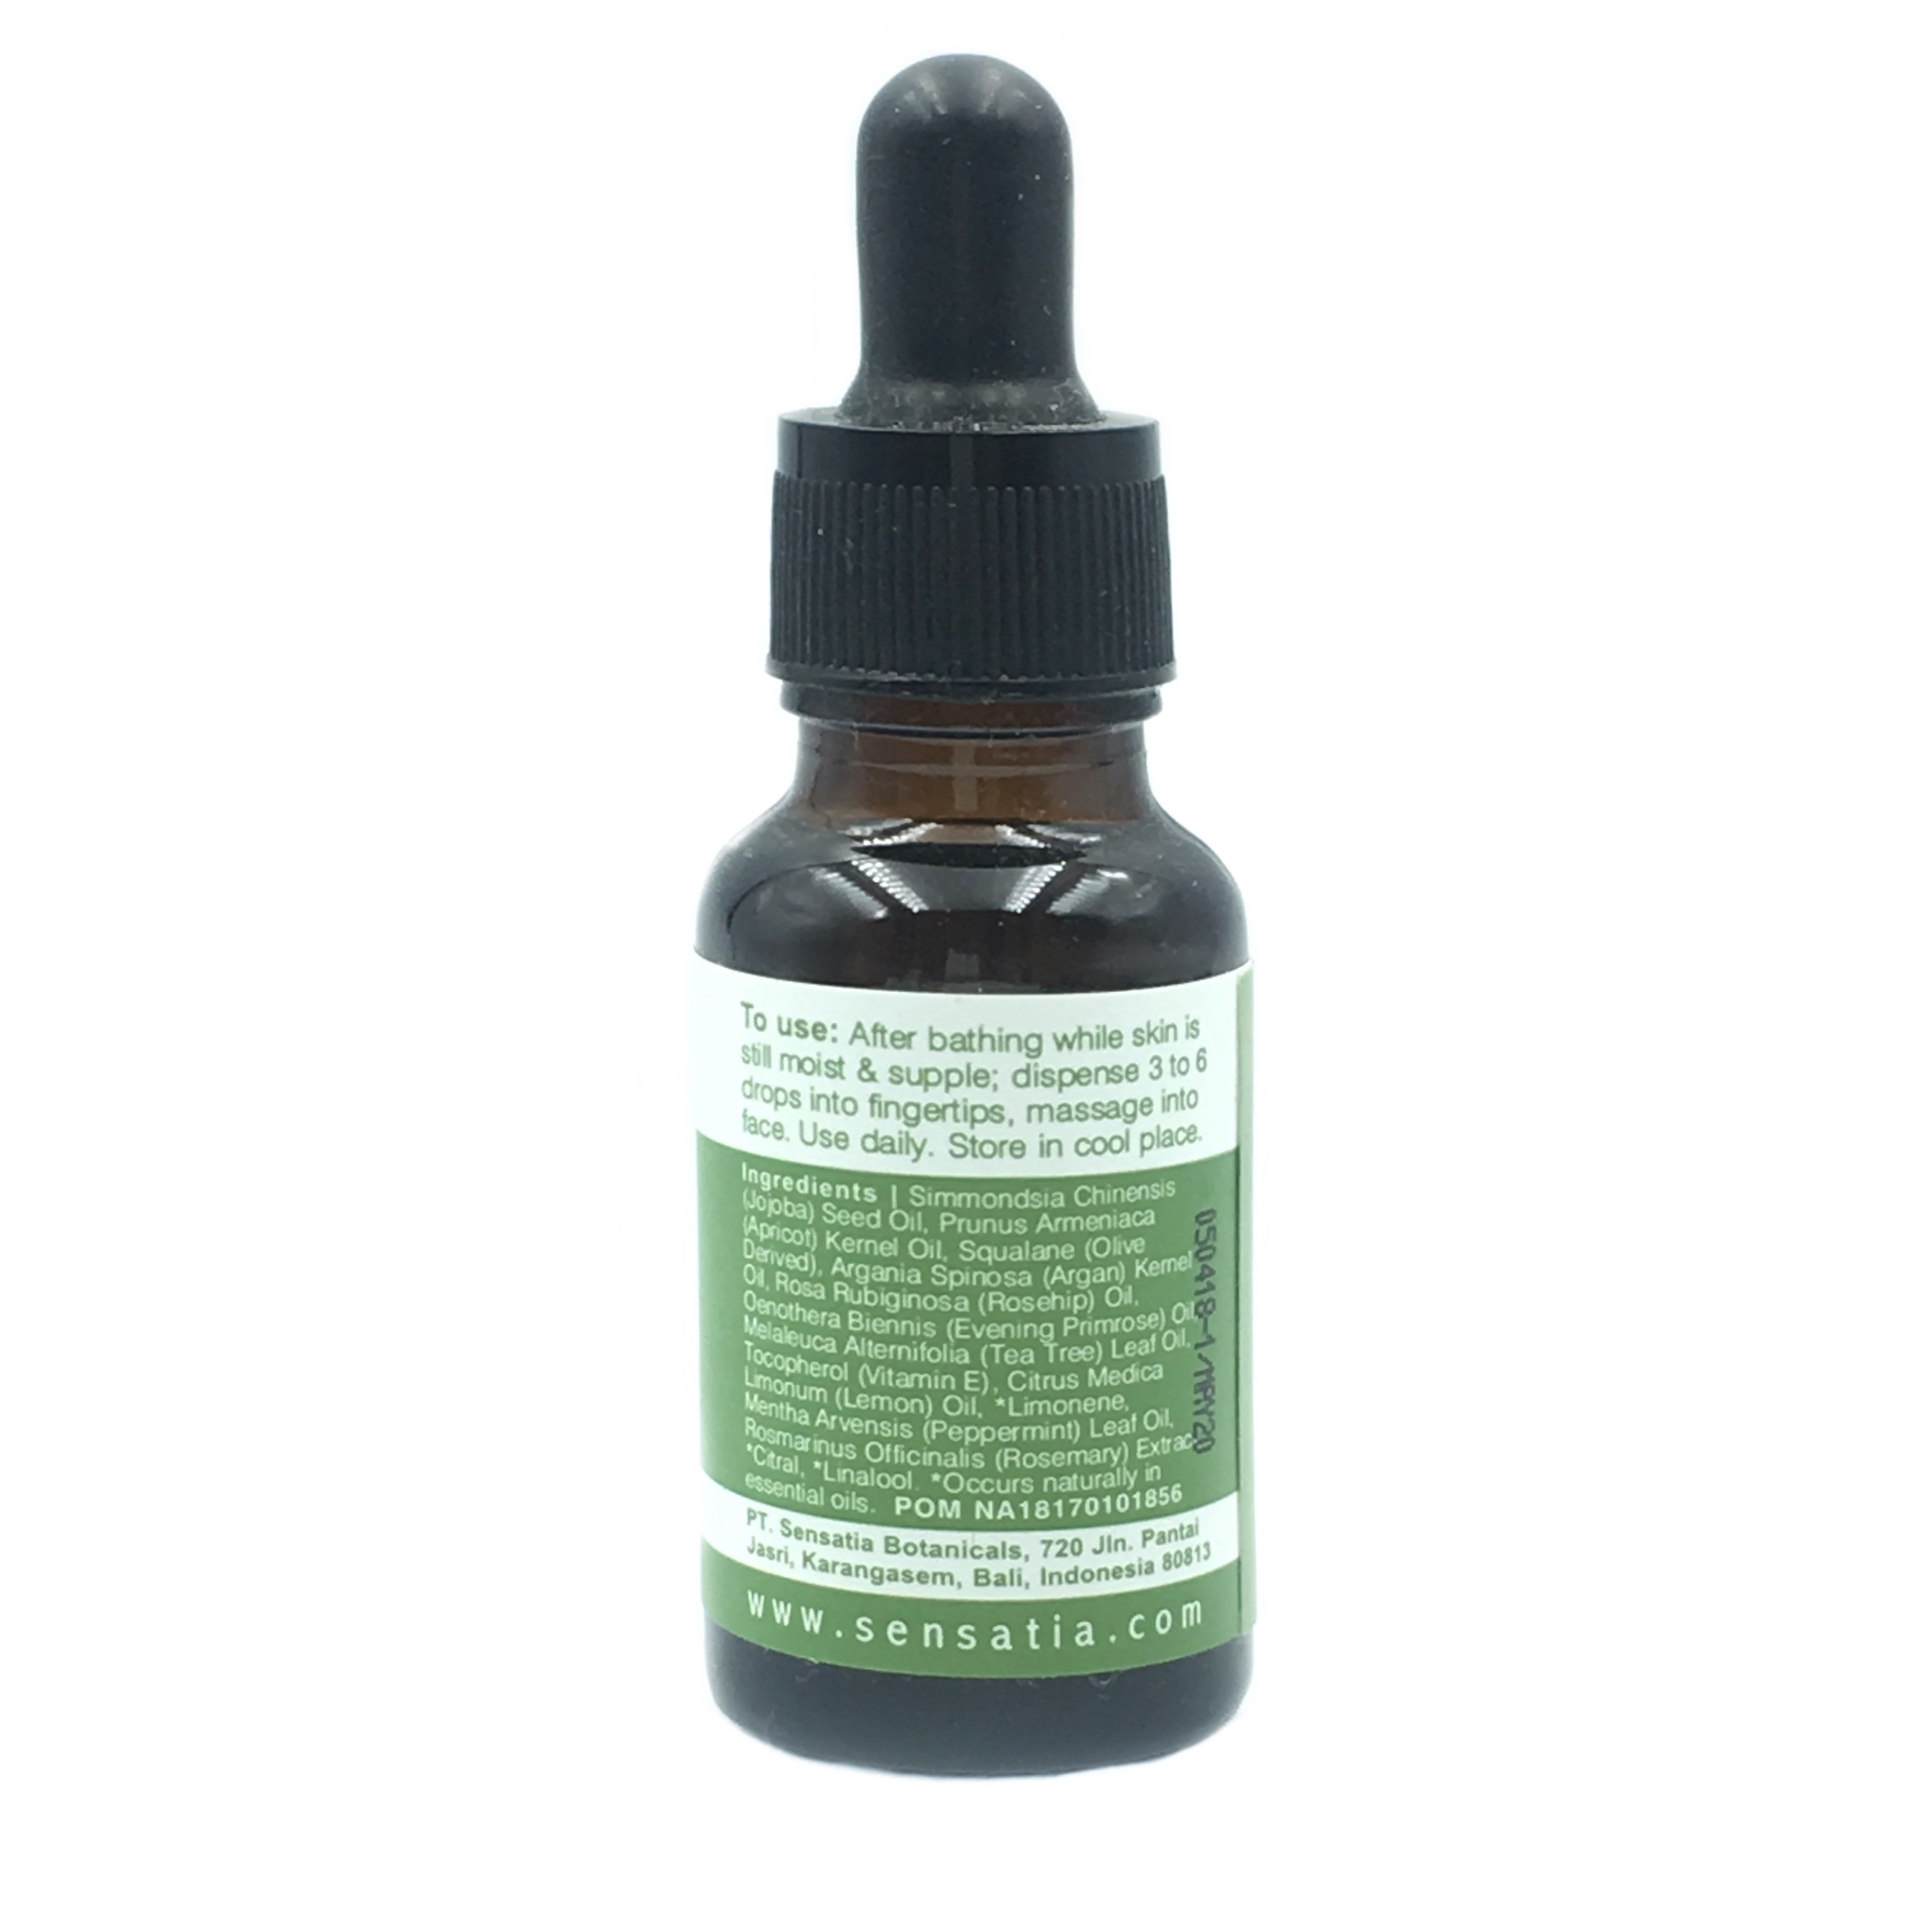 Sensatia Botanicals Oil To Acne-Prone Facial Hydrate